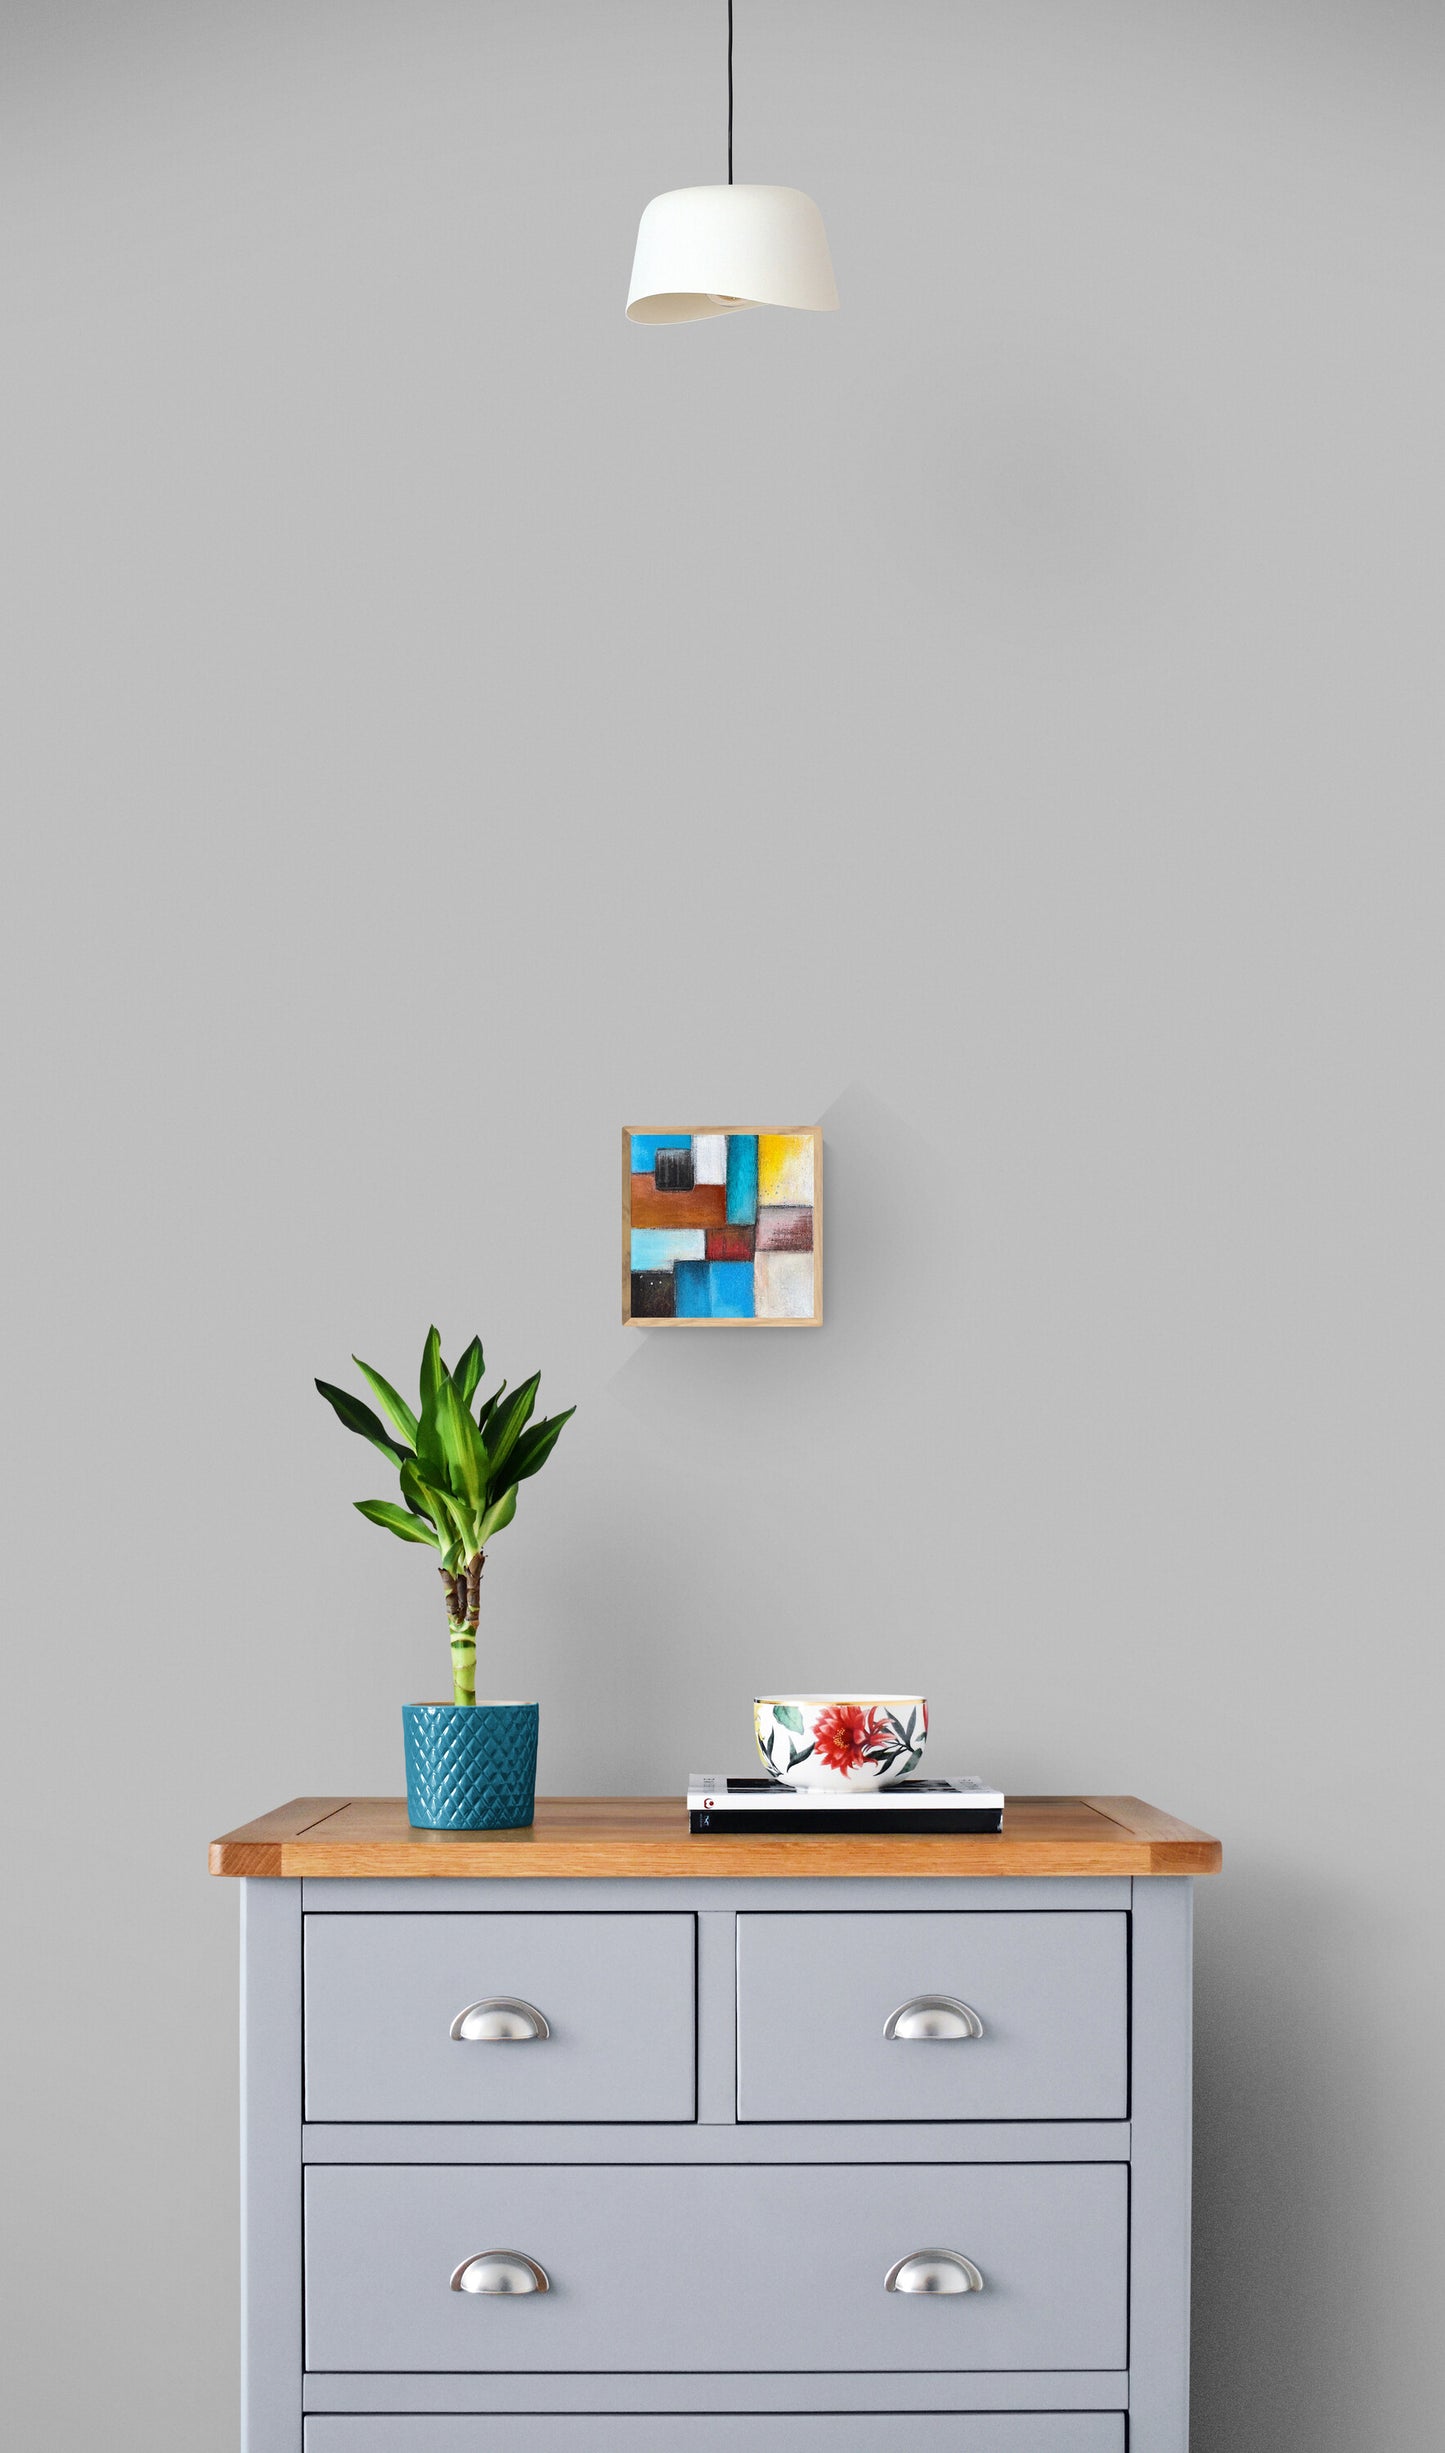 Blocks | Acrylic Painting | 8x8 | Wall Art